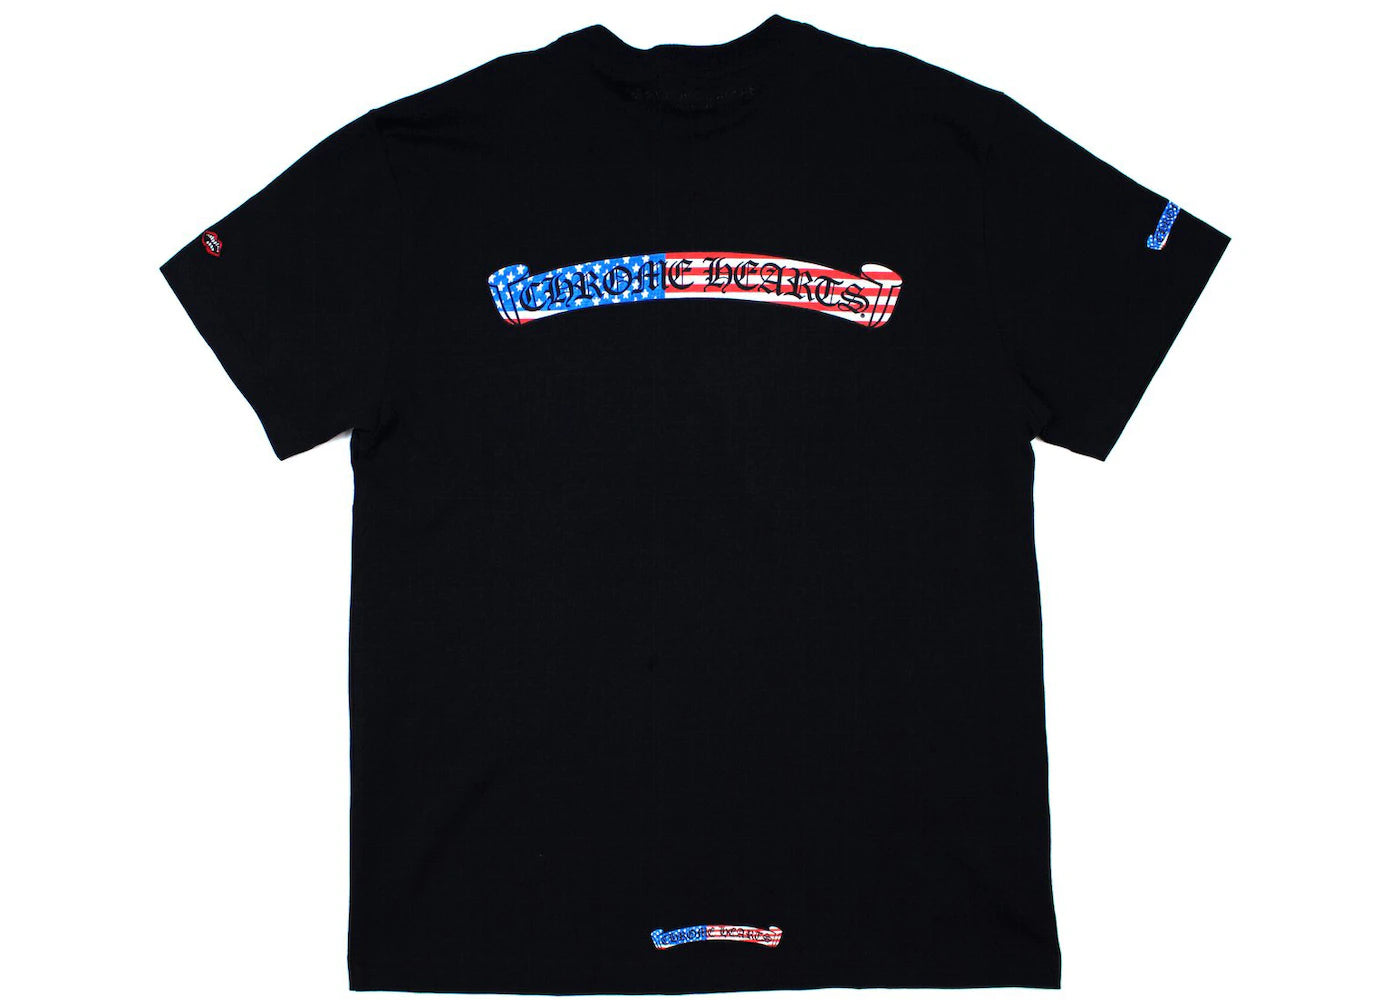 Chrome Hearts Matty Boy America T-shirt Black (JW)